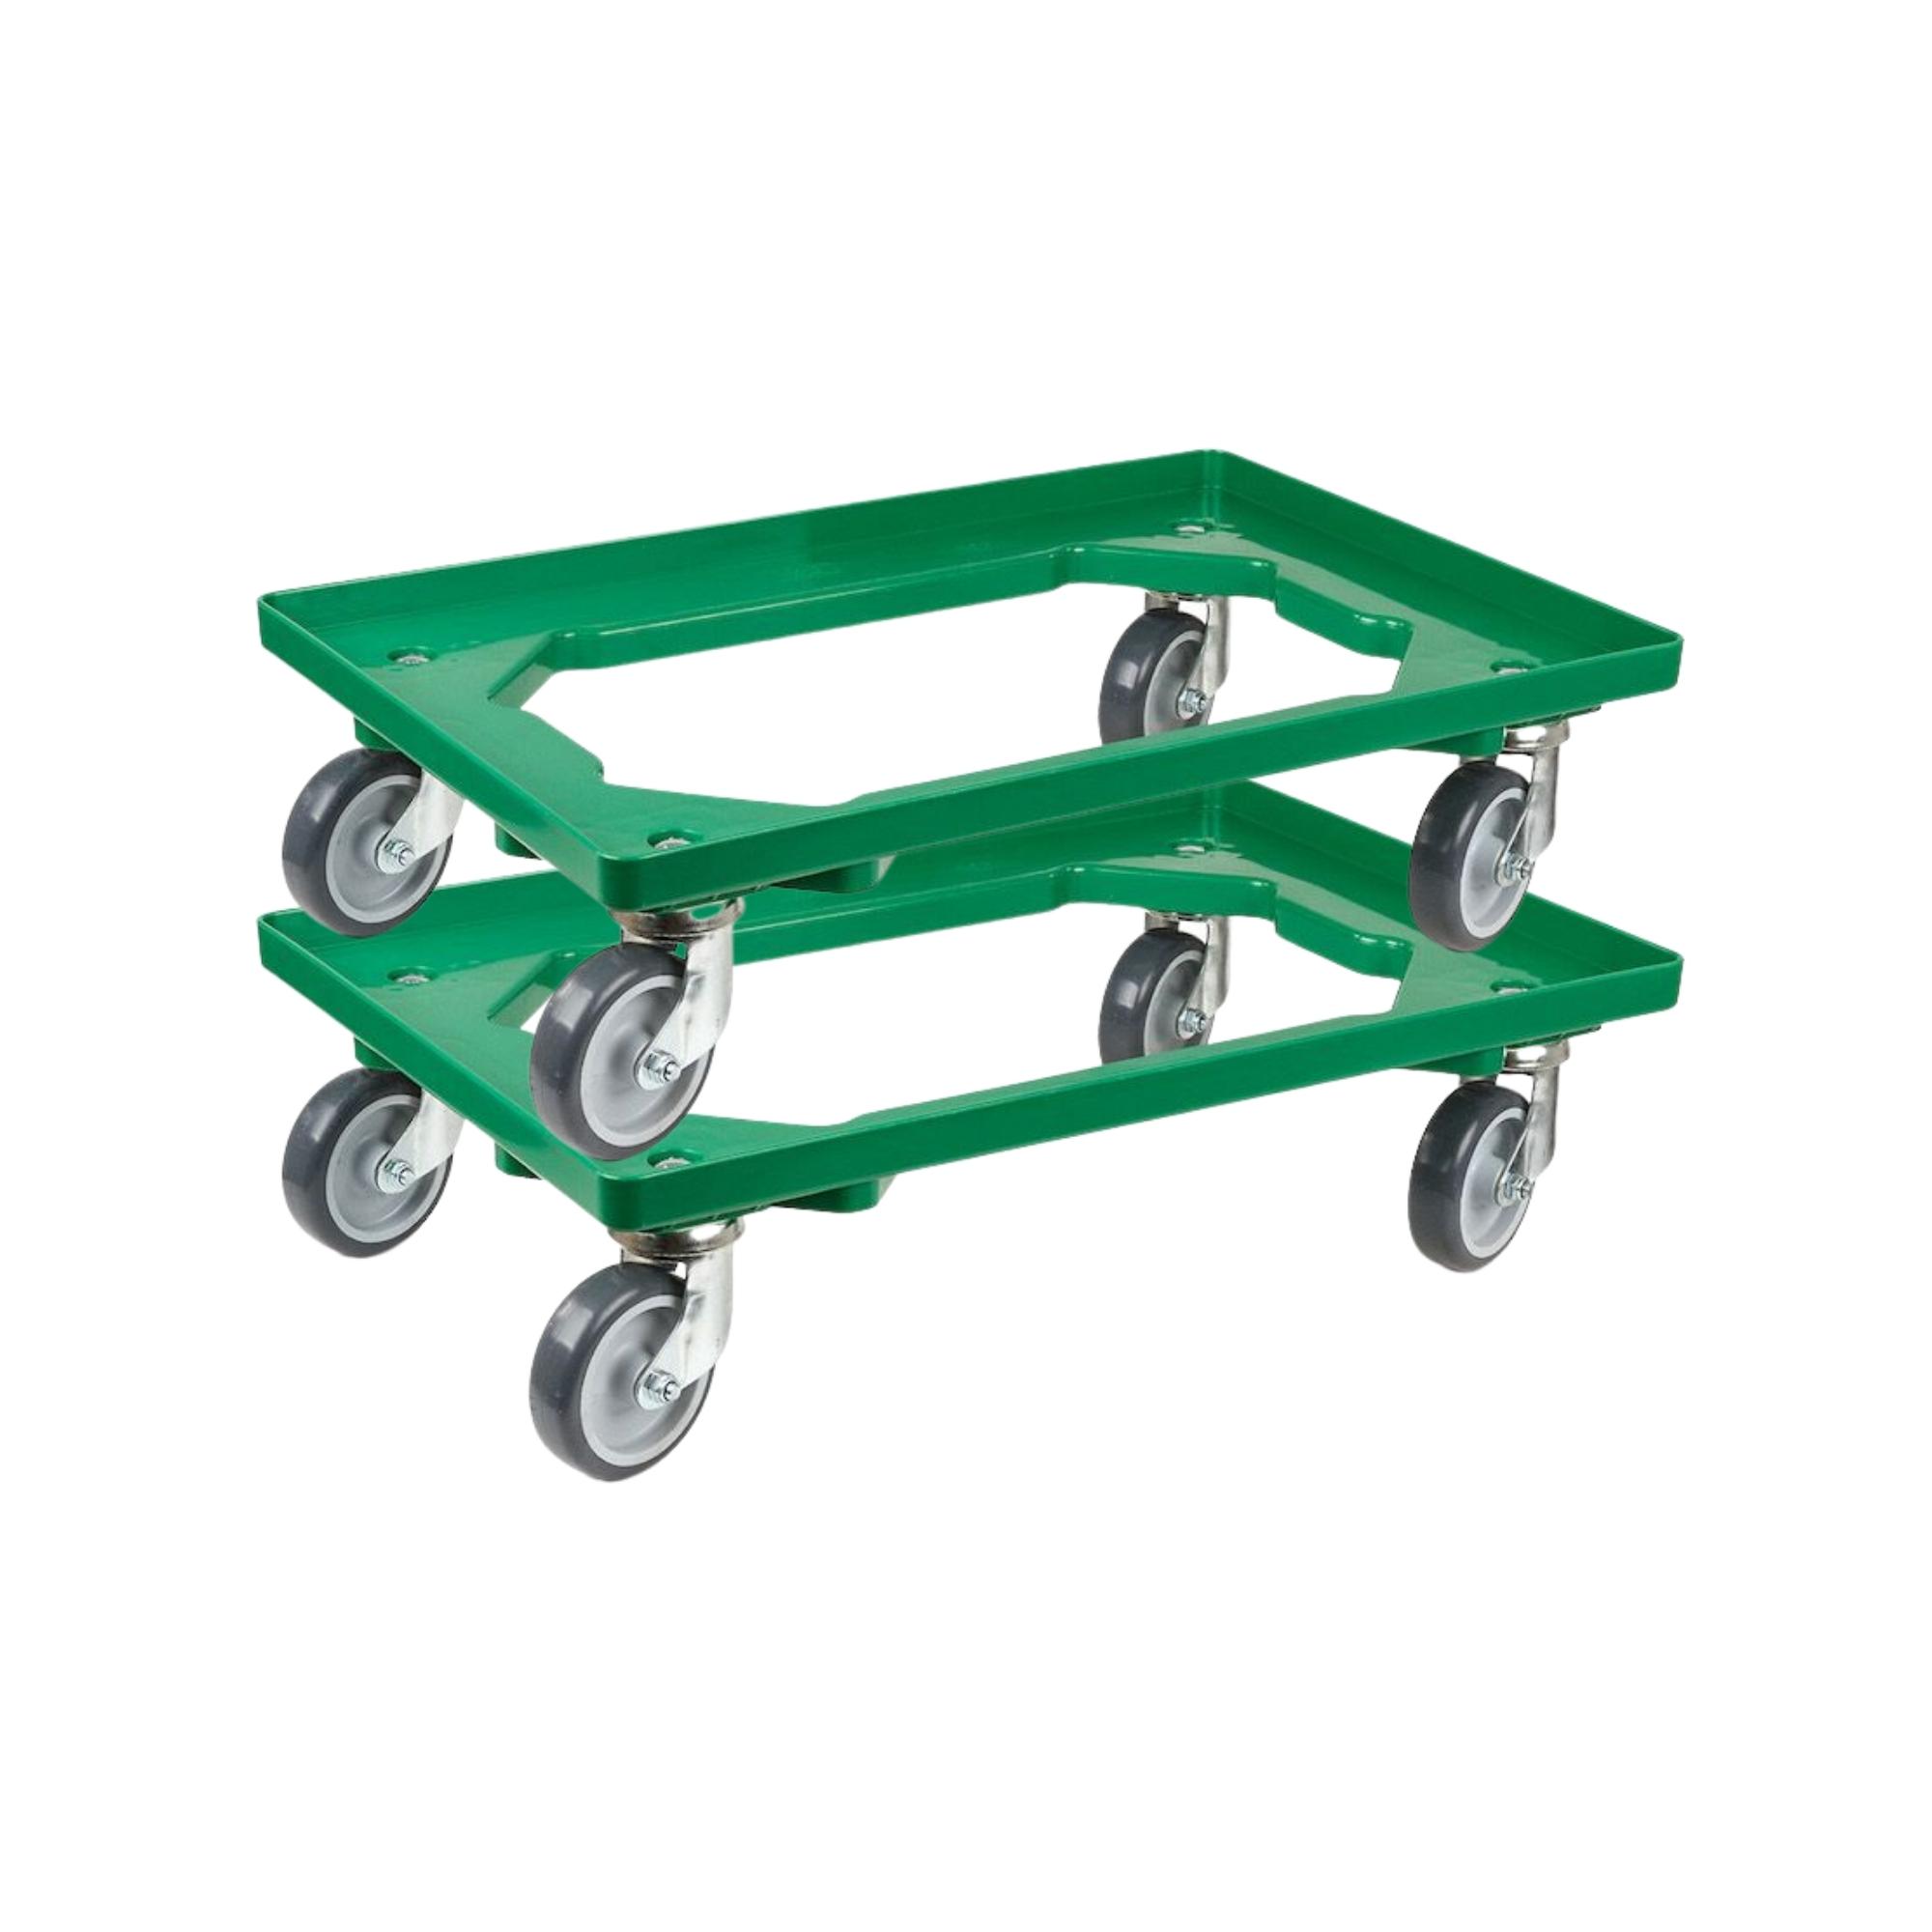 SparSet 2x Transportroller für Euroboxen 60x40cm mit Gummiräder grün | Offenes Deck | 2 Lenkrollen & 2 Bockrollen | Traglast 300kg | Kistenroller Logistikroller Rollwagen Profi-Fahrgestell